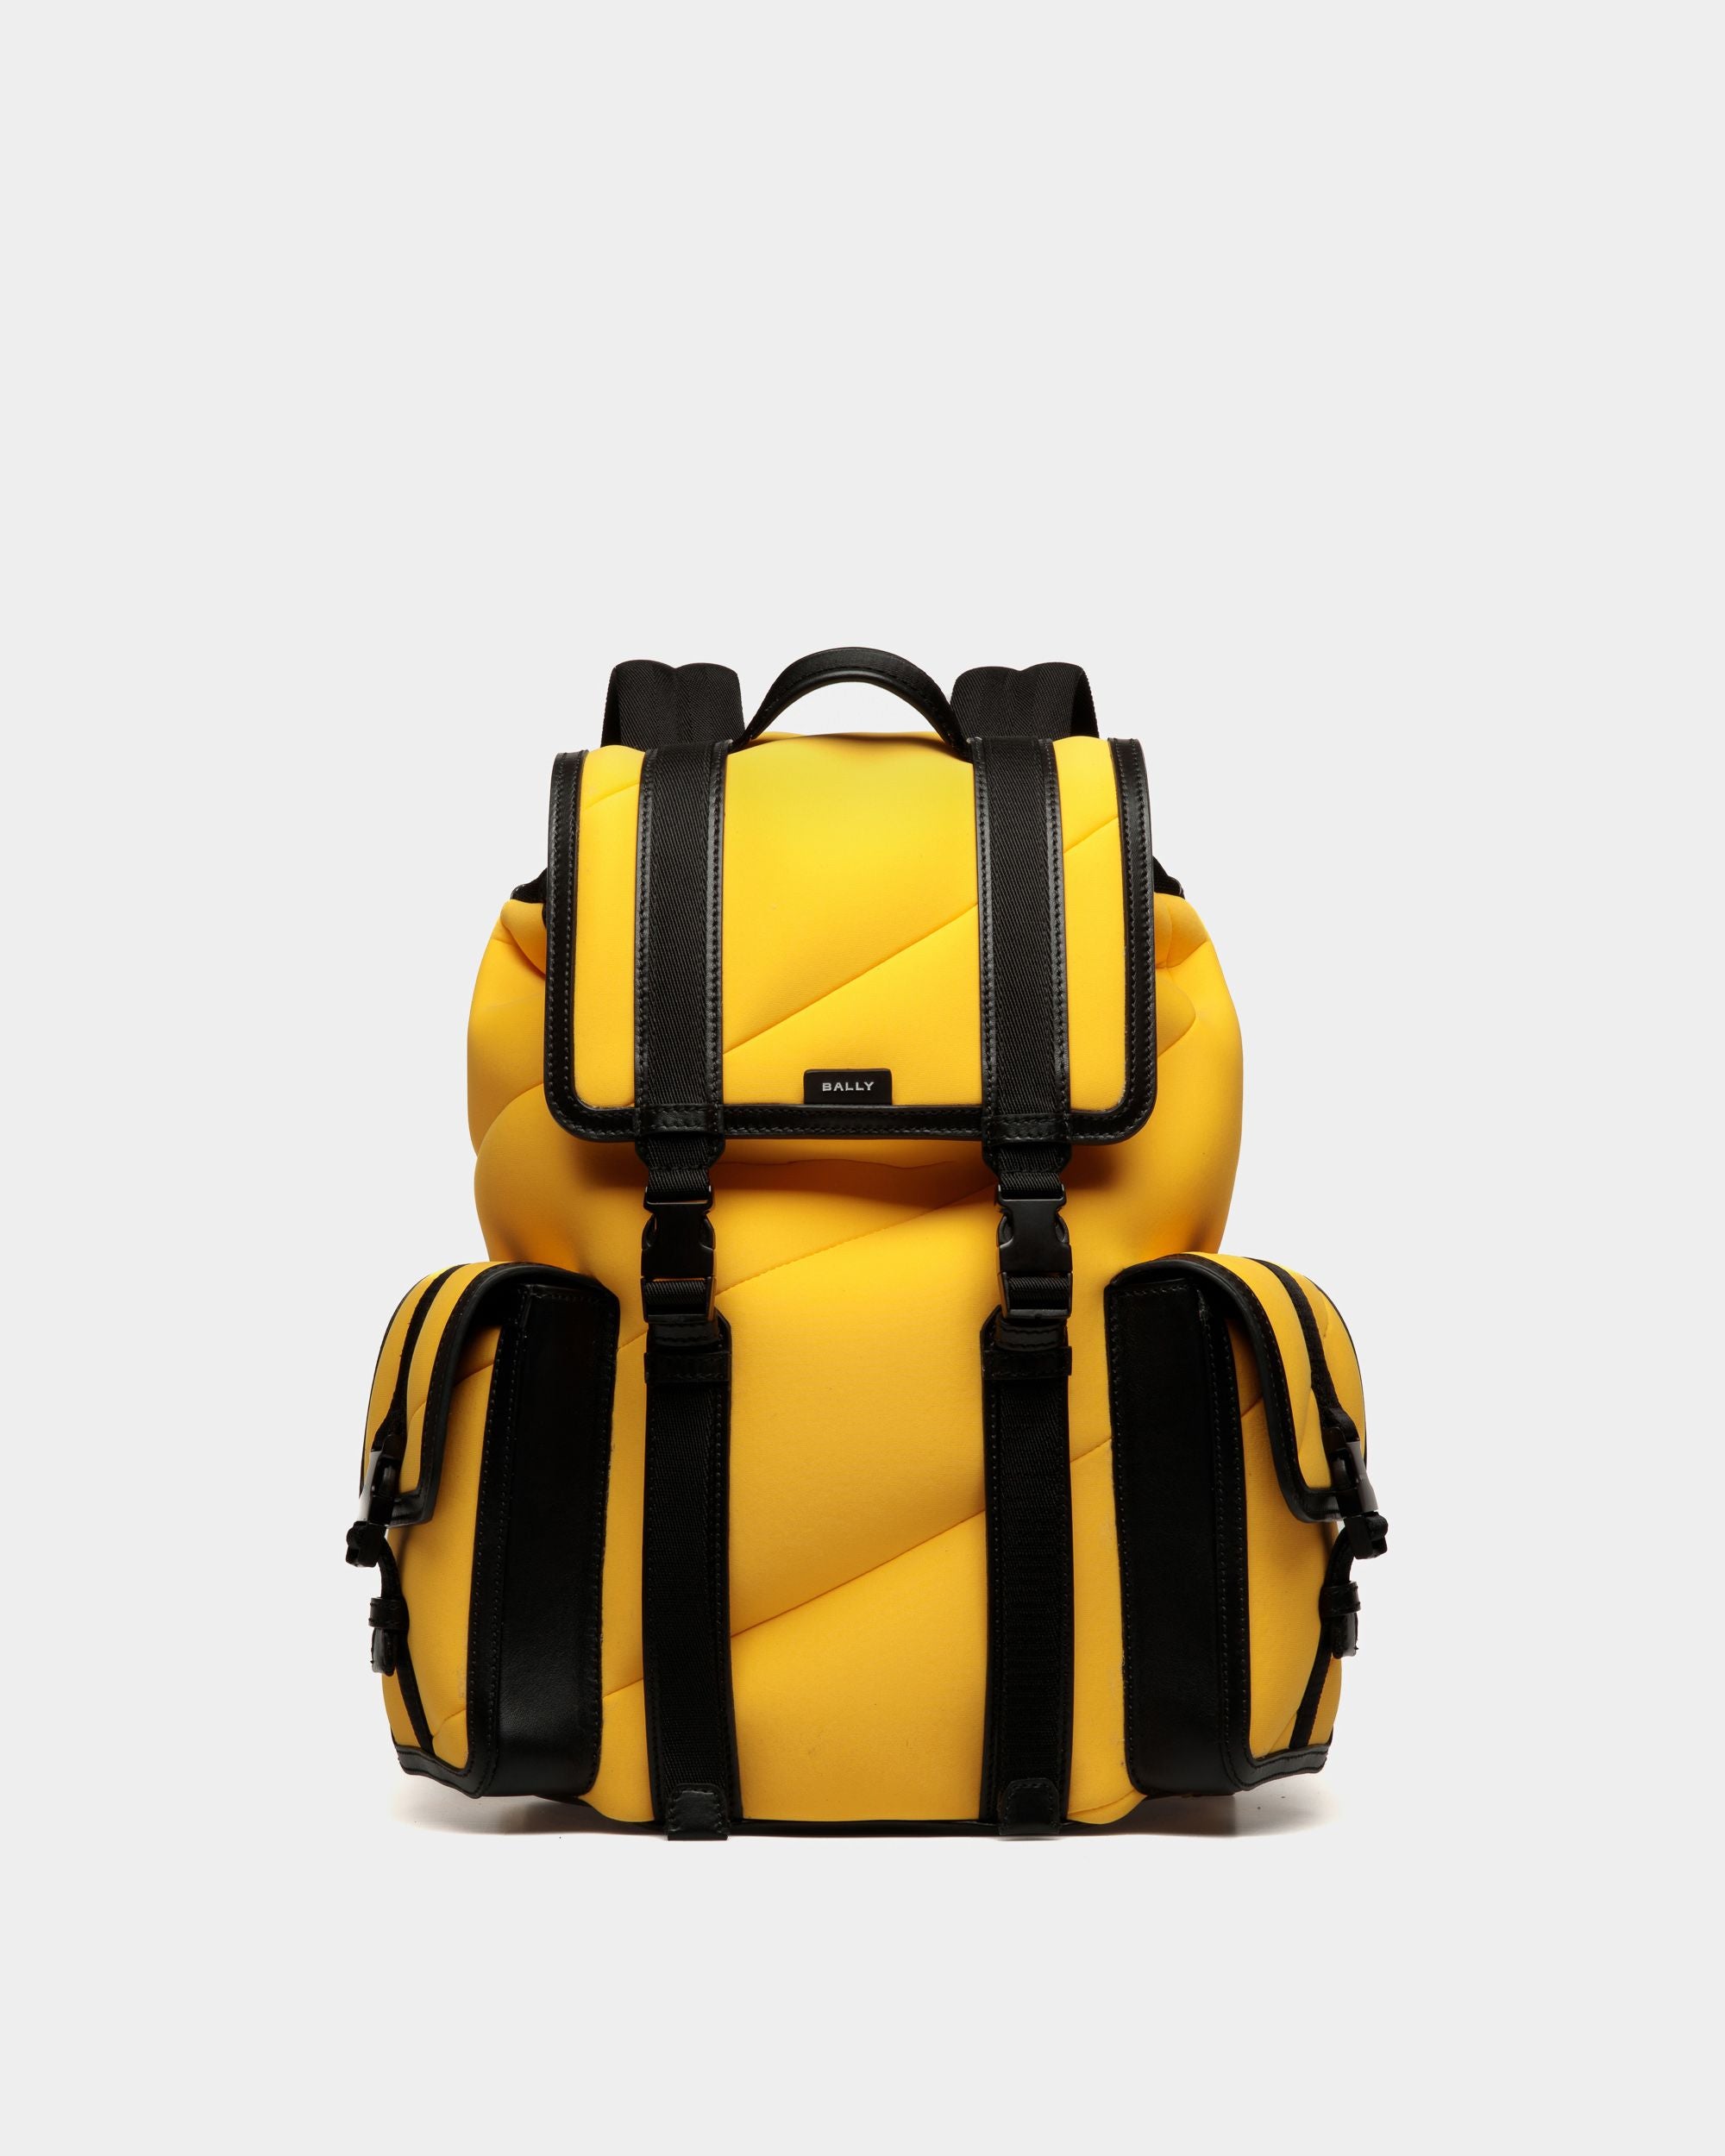 Mountain | Men's Backpack in Yellow Neoprene | Bally | Still Life Front